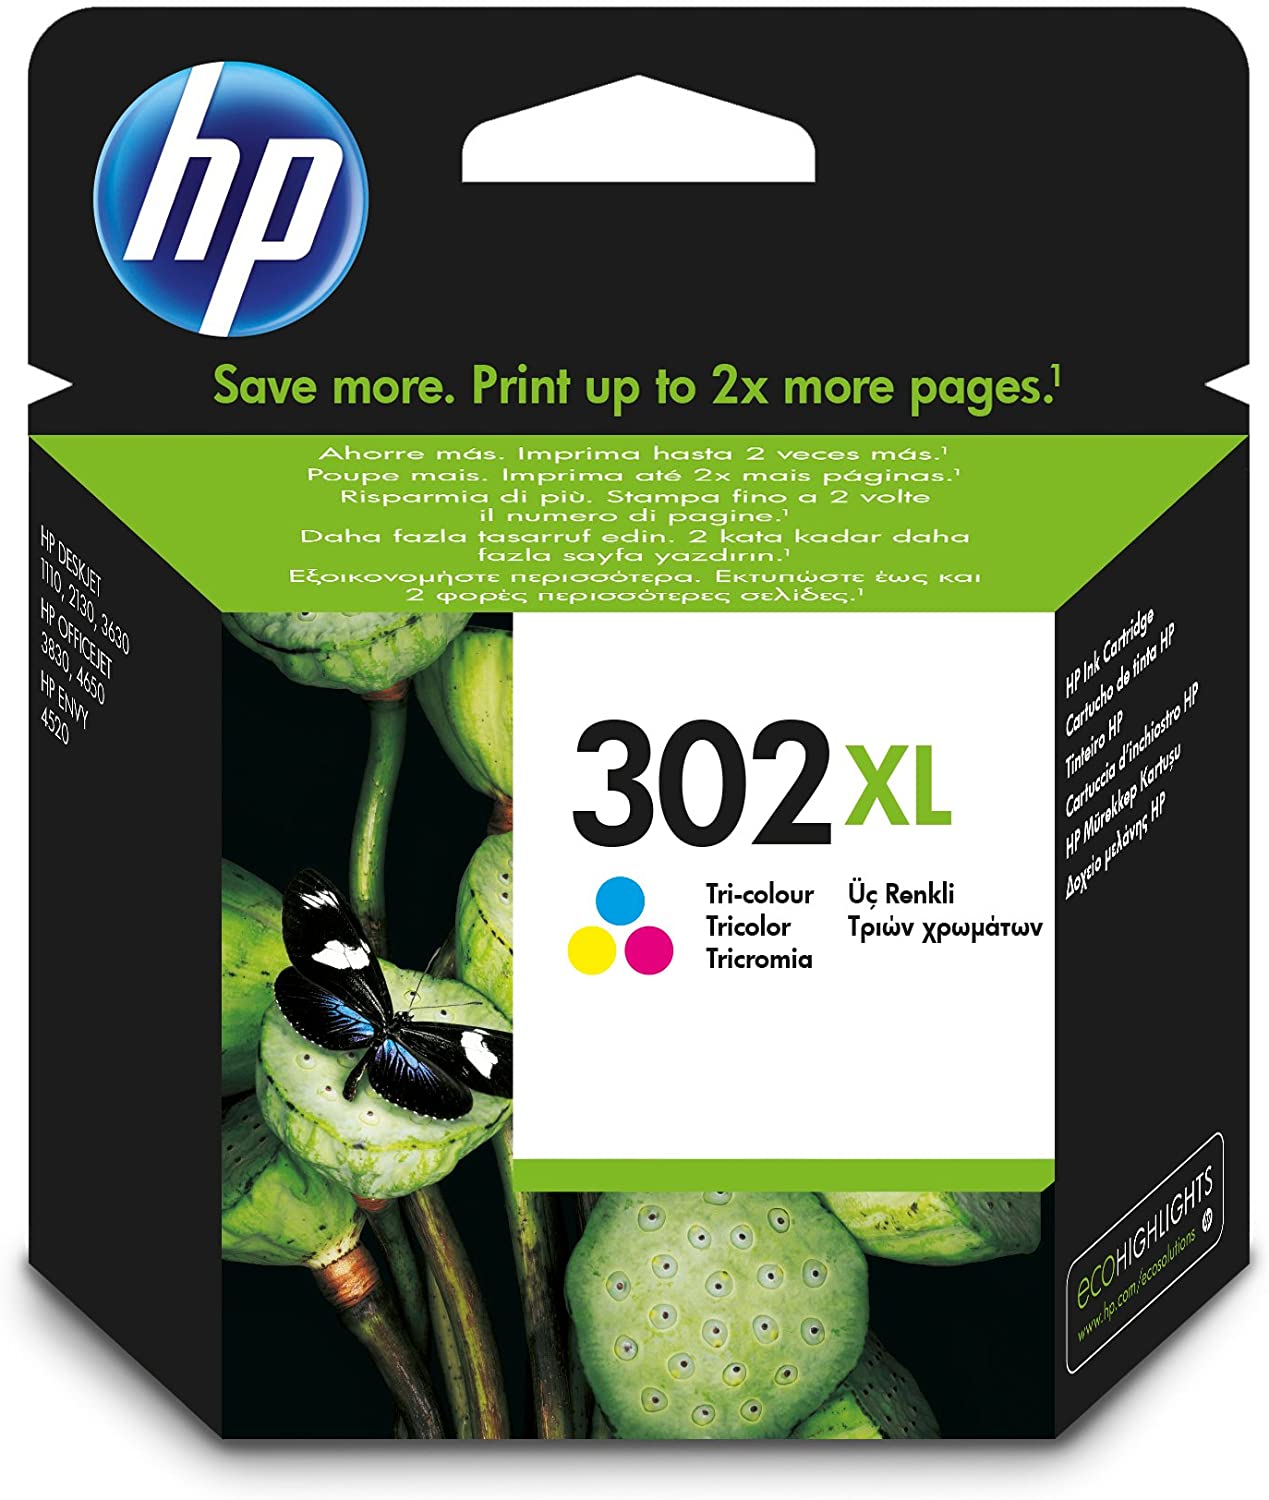 Genuine HP 302 HP302XL Printer Cartridges Multipack Single Original Packaging Colors | eBay